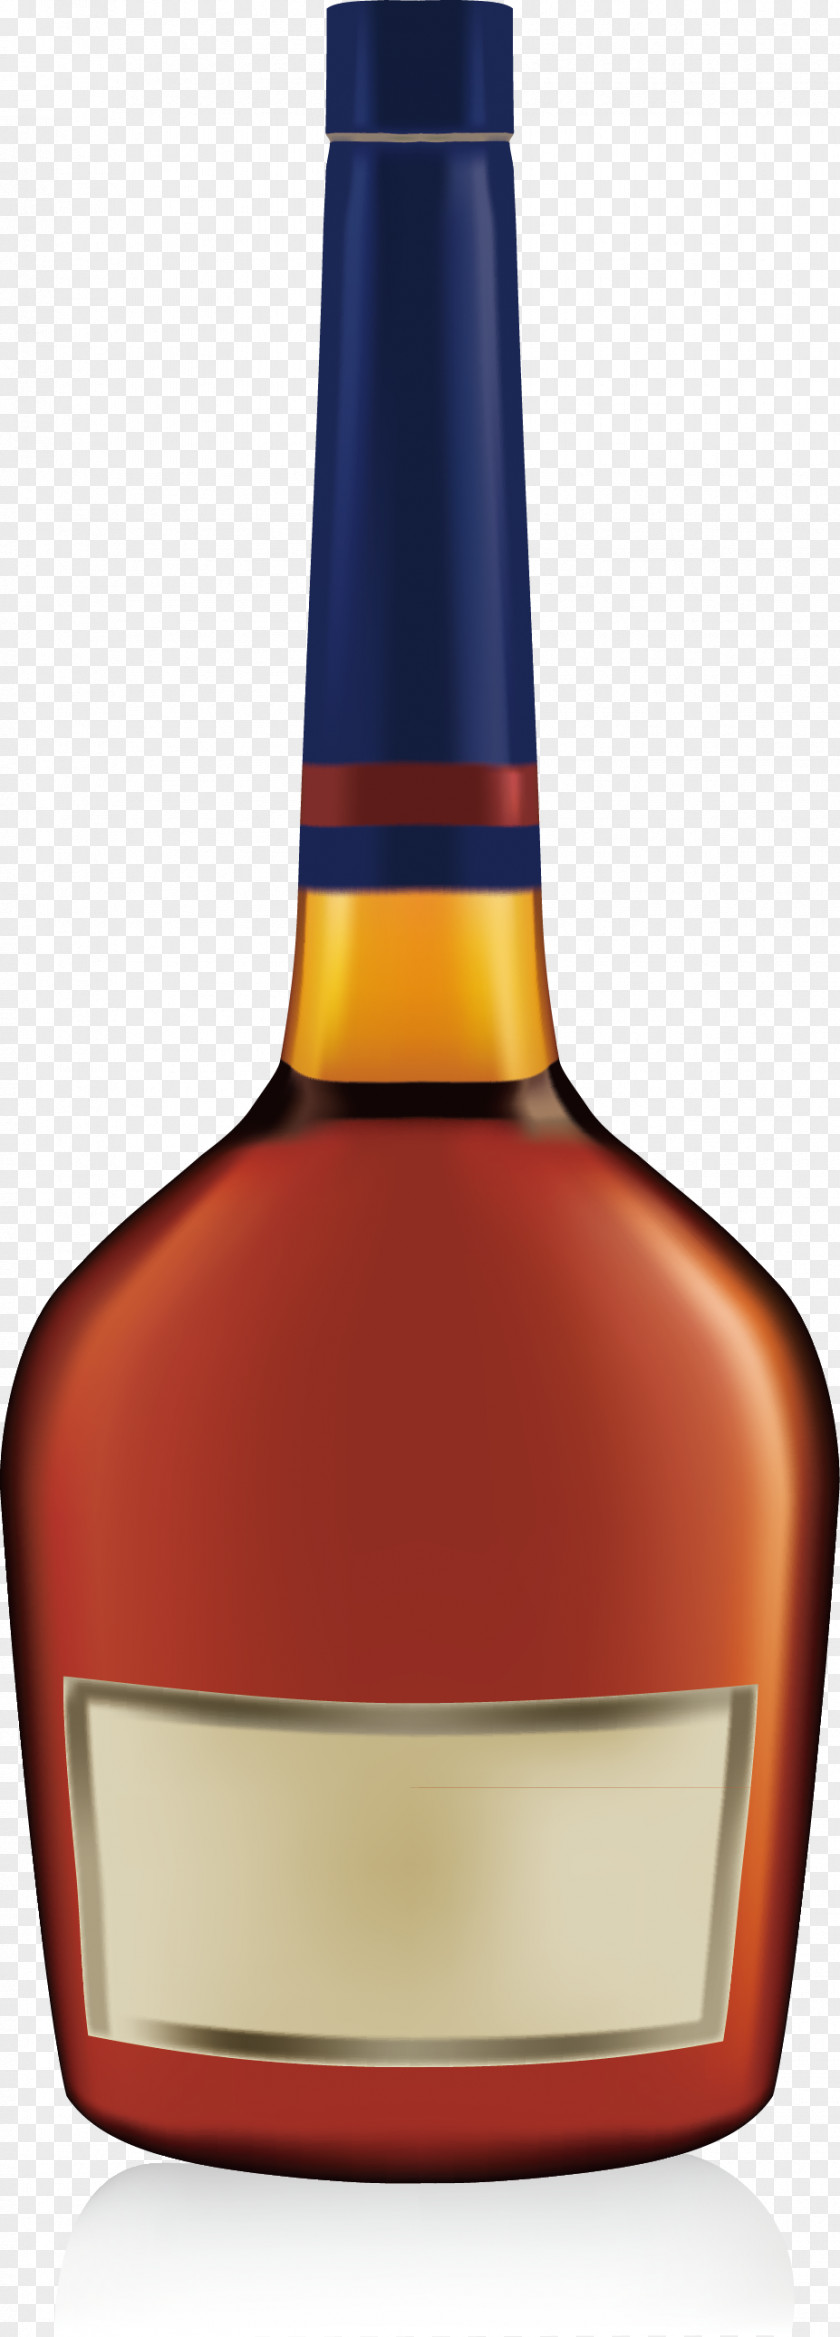 Blue Classic Bottle Whisky Brandy Cognac Wine PNG